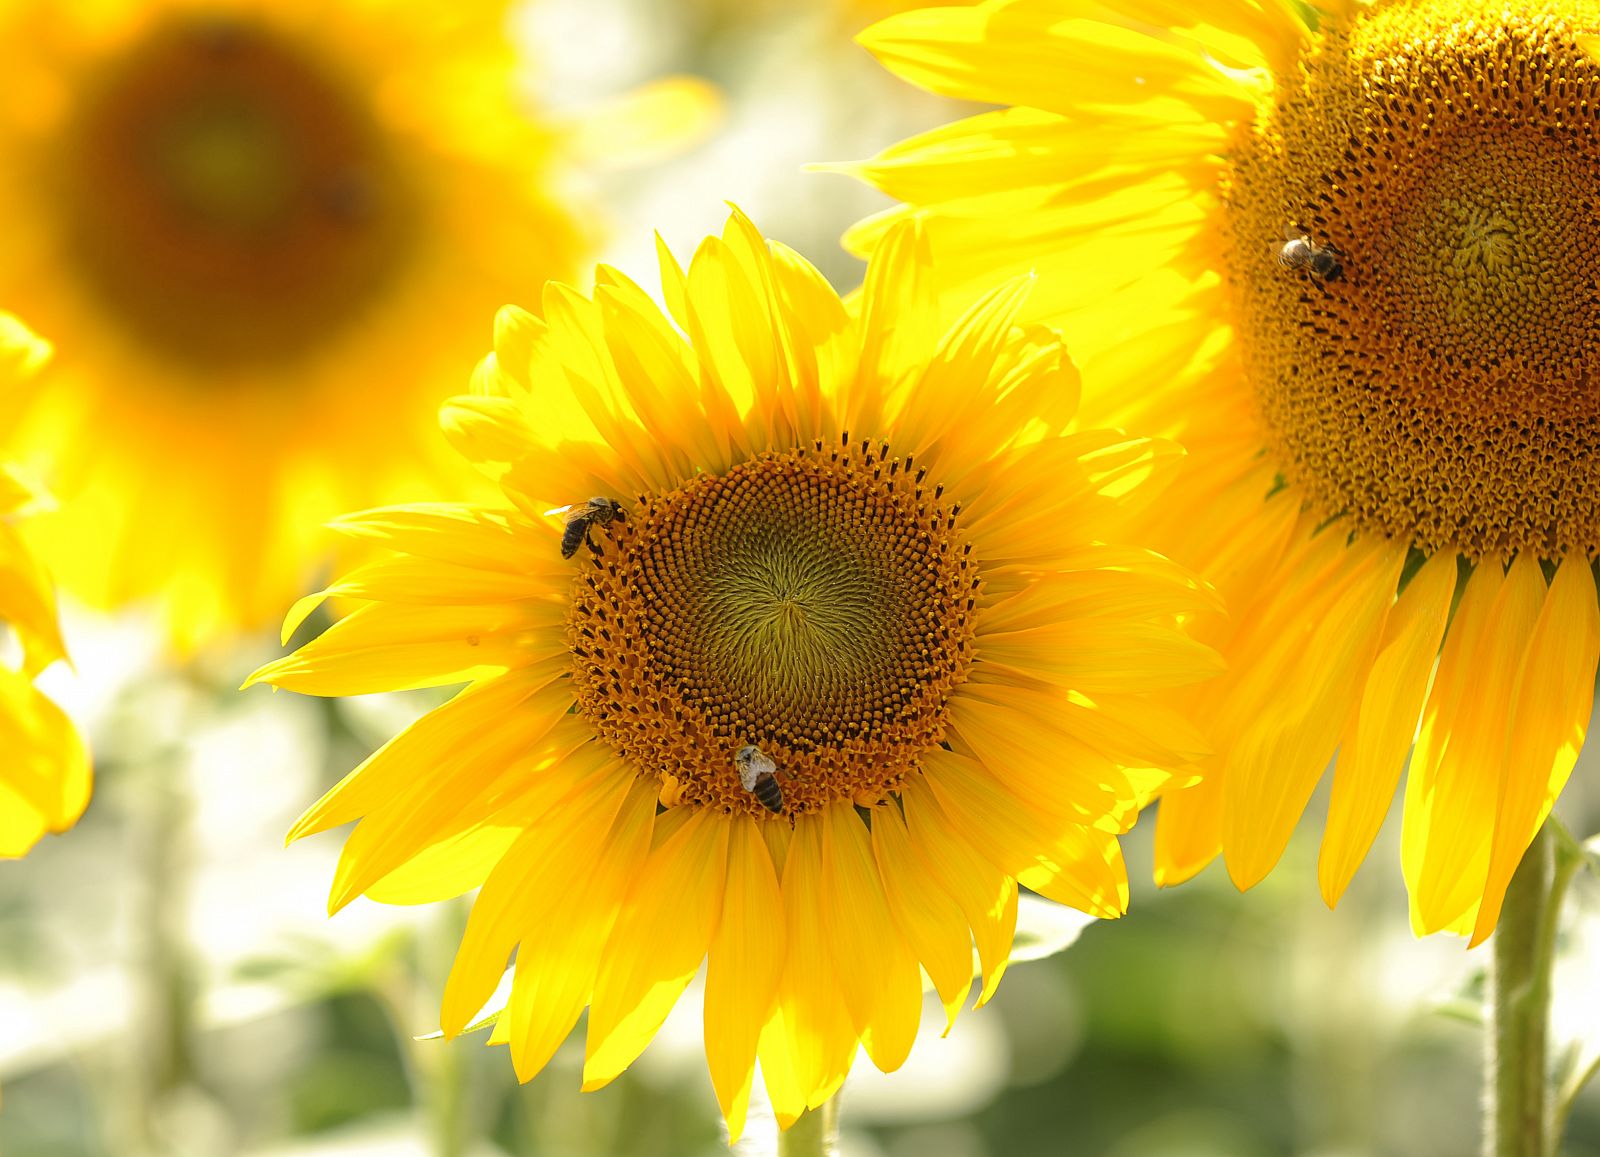 A bee lands on a sunflower to gather pollen near Stip